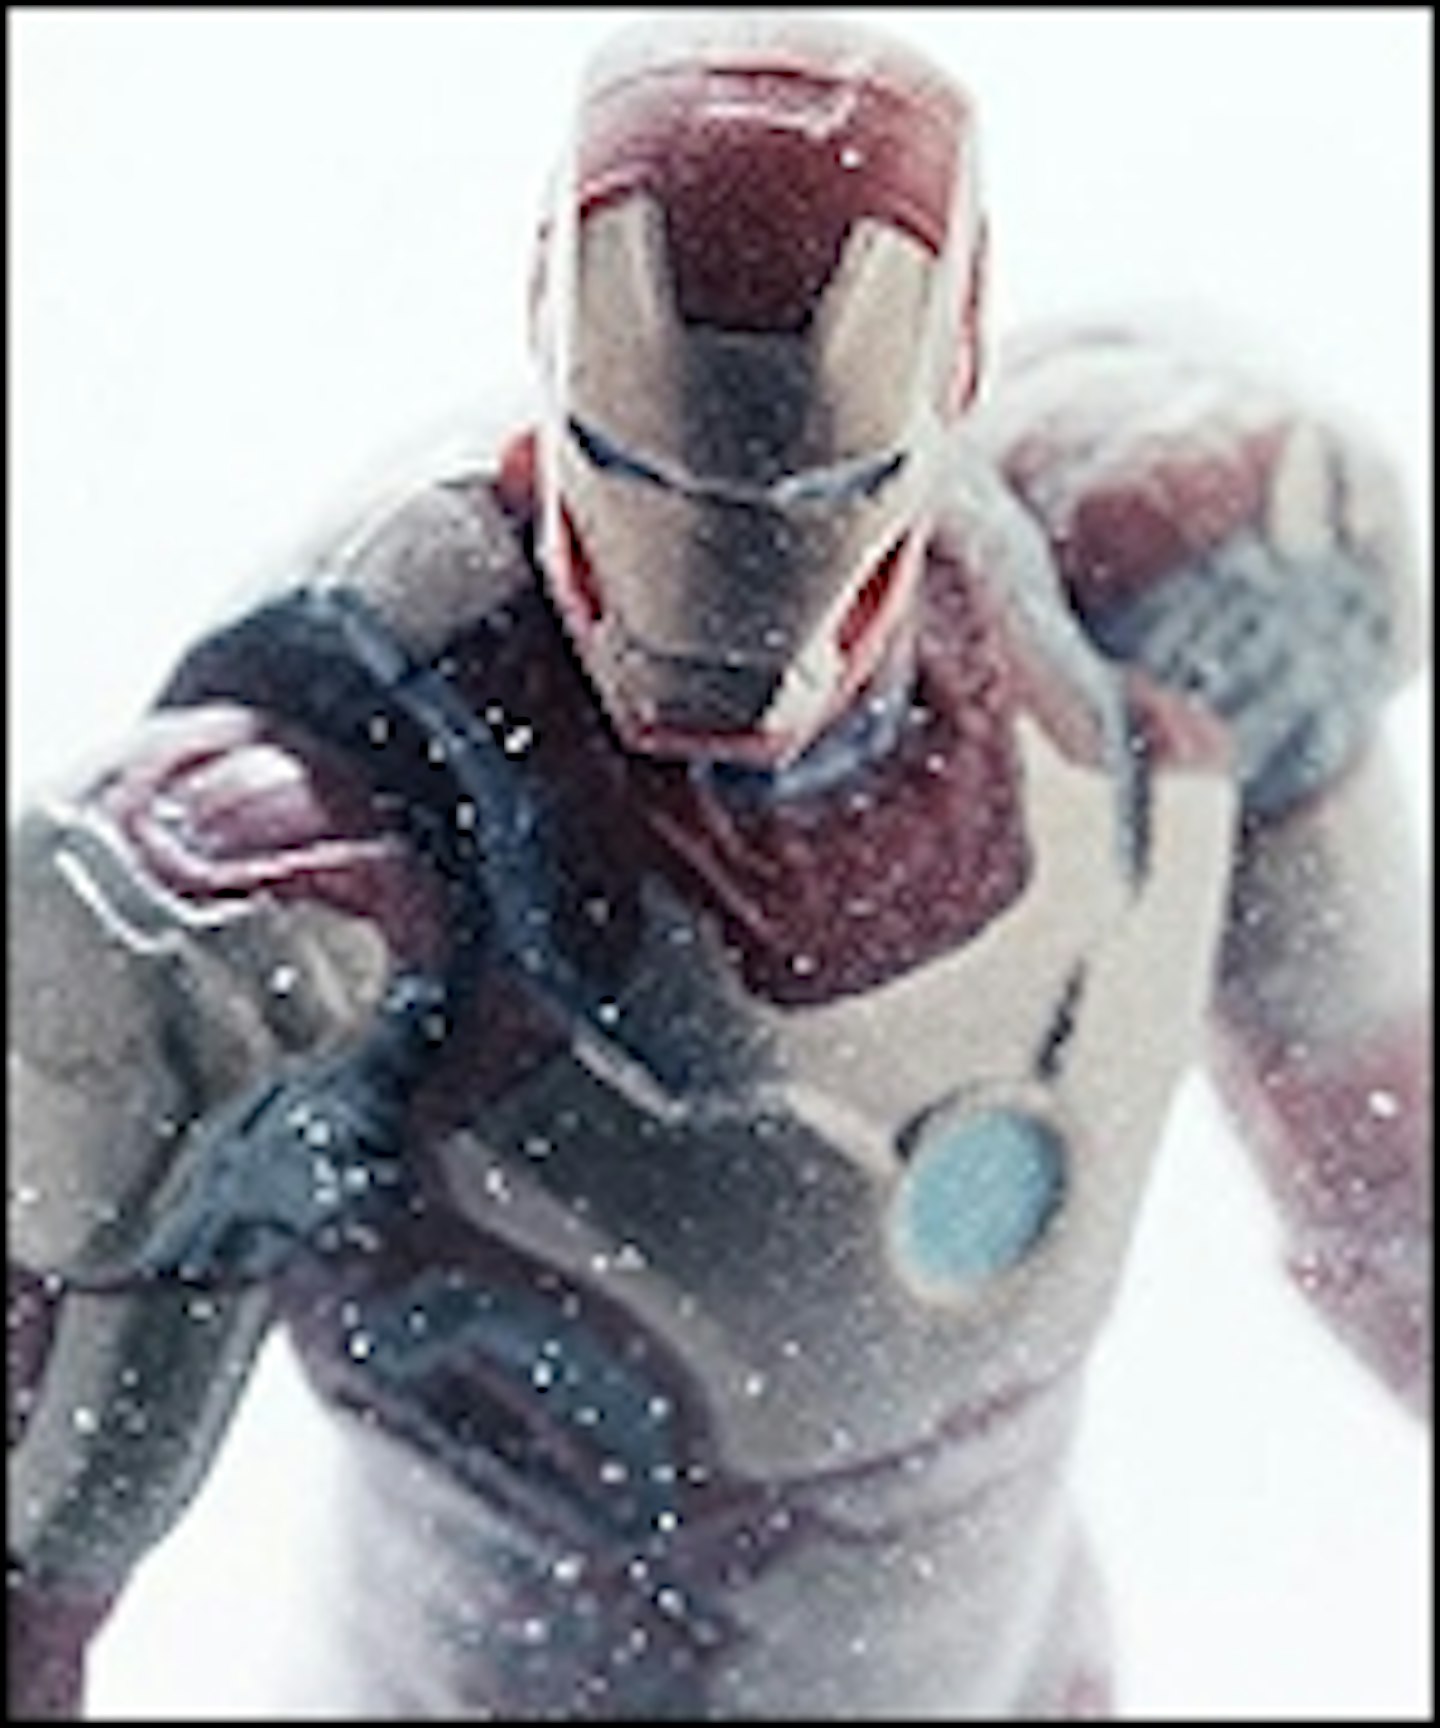 Marvel Reveals Iron Man 3 Toys